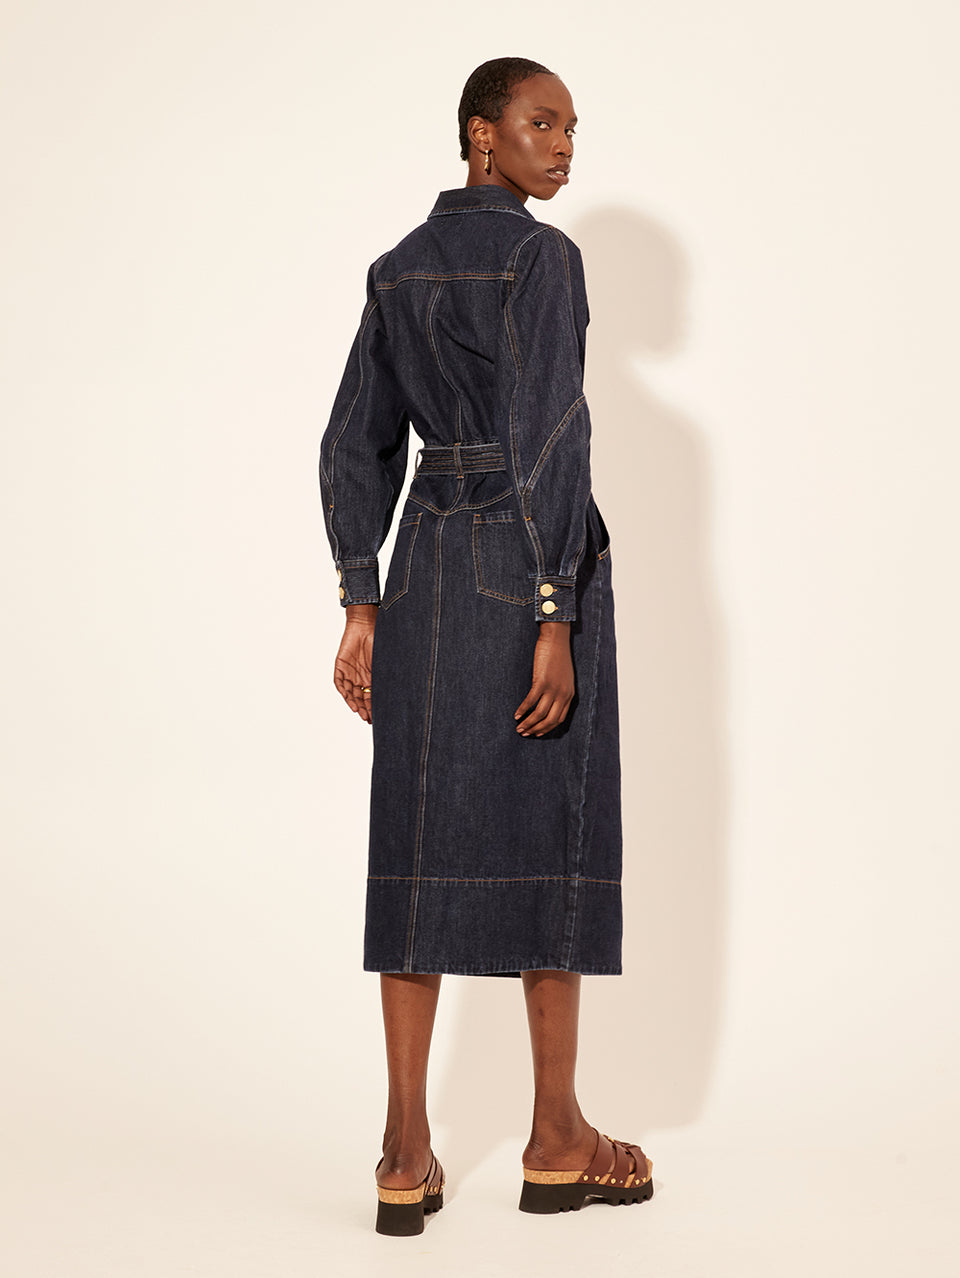 Bonny Midi Dress KIVARI | Model wears navy denim midi dress back view